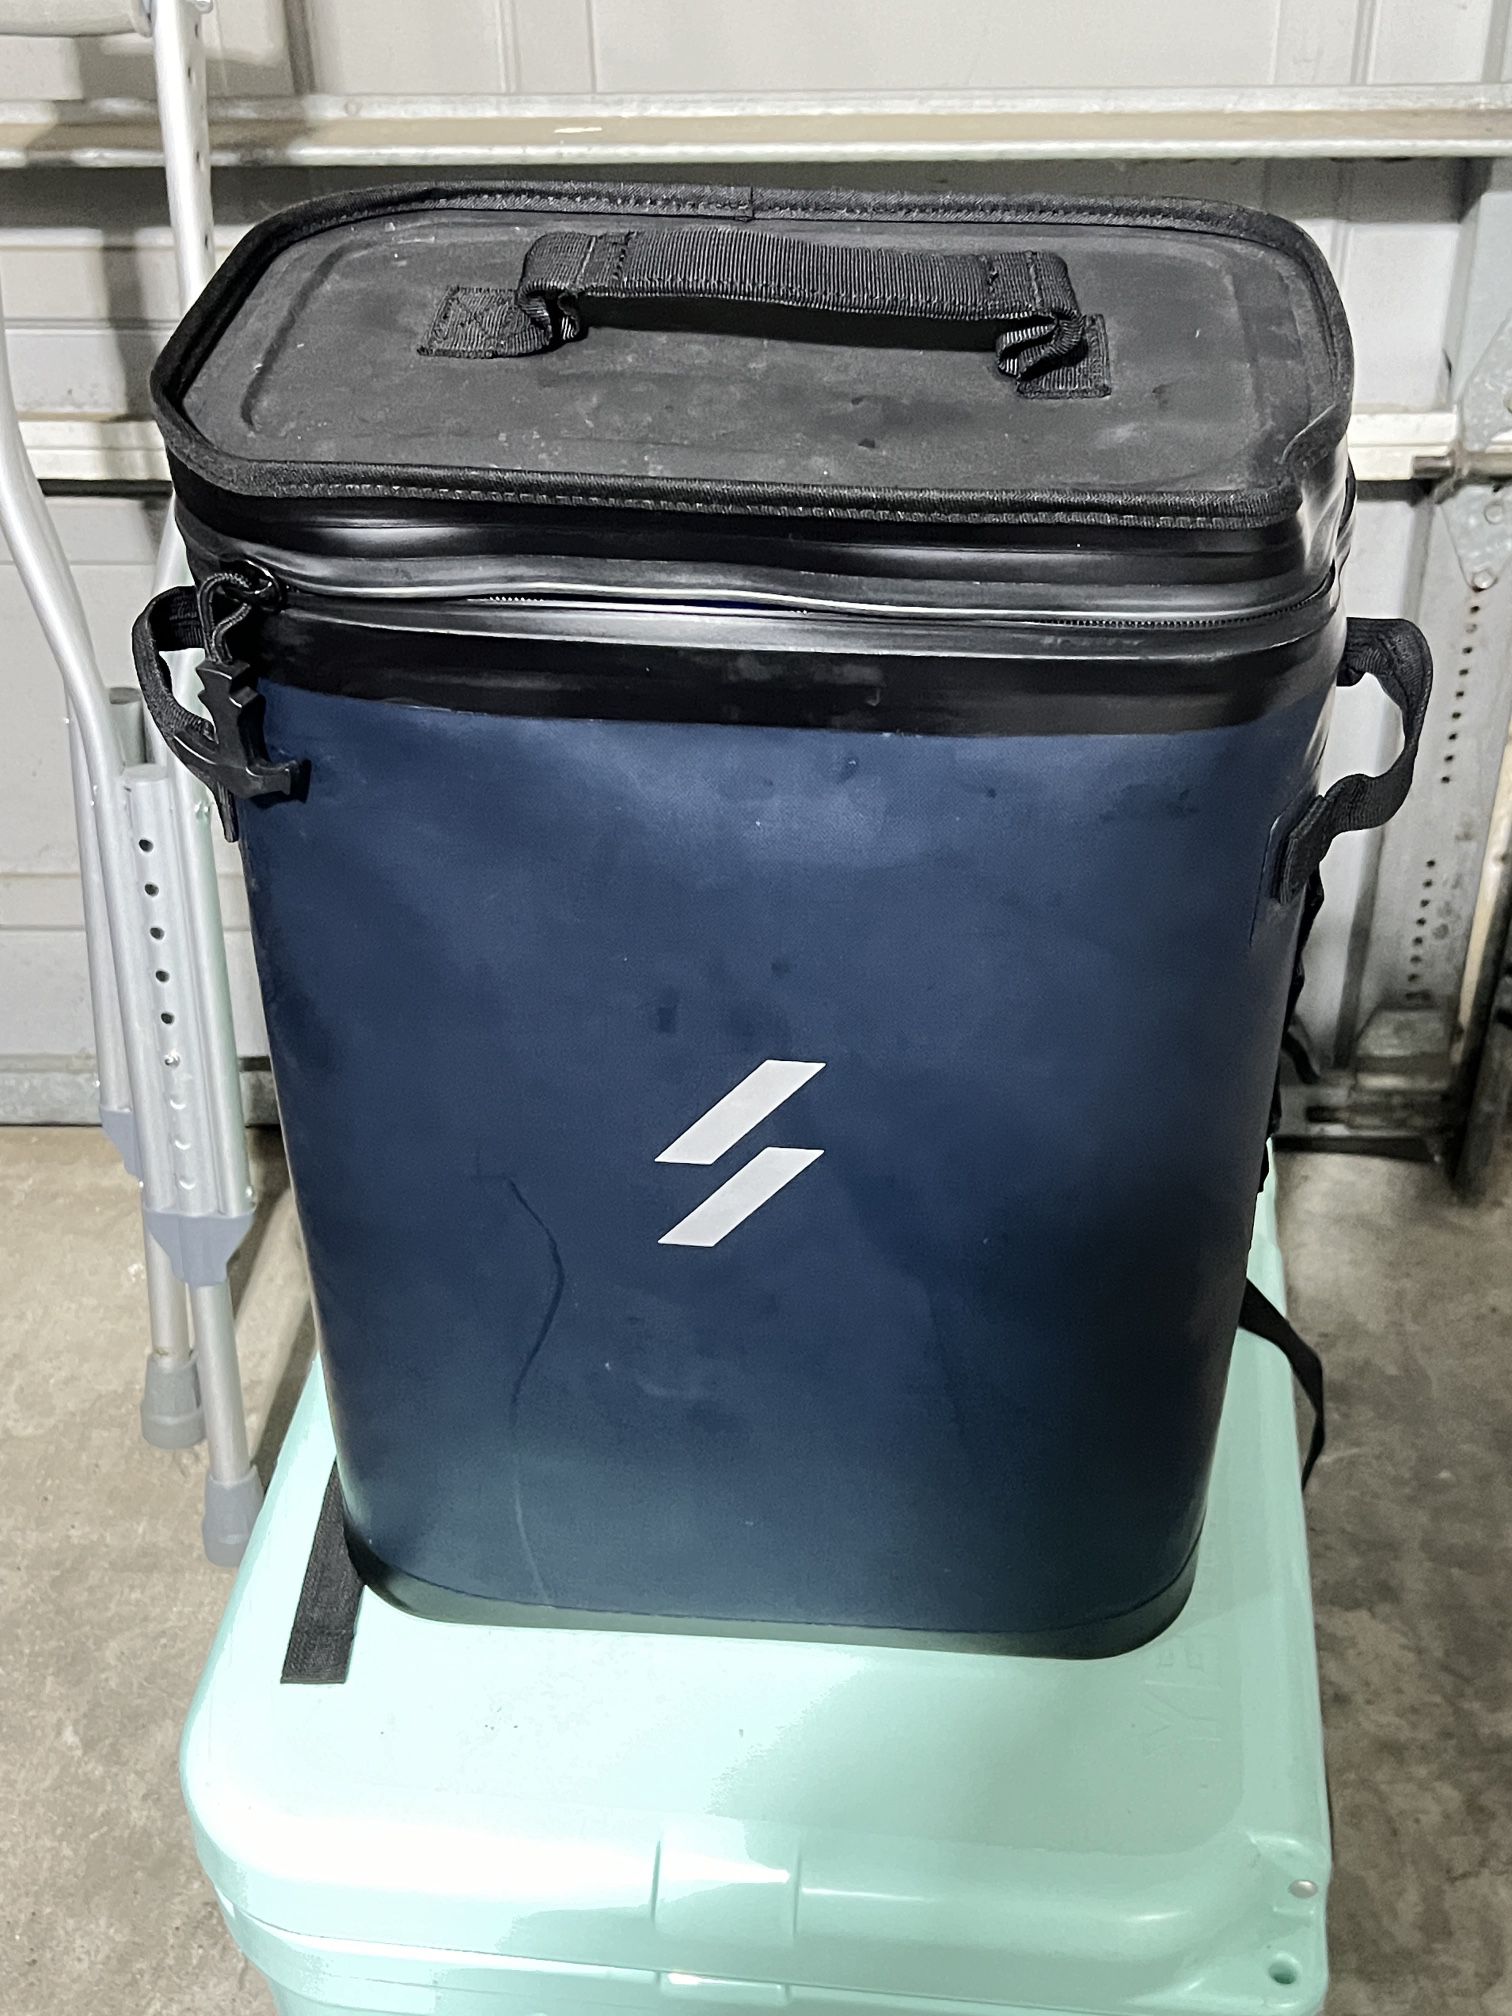 Backpack Cooler - Insulted Waterproof Cooler Bag